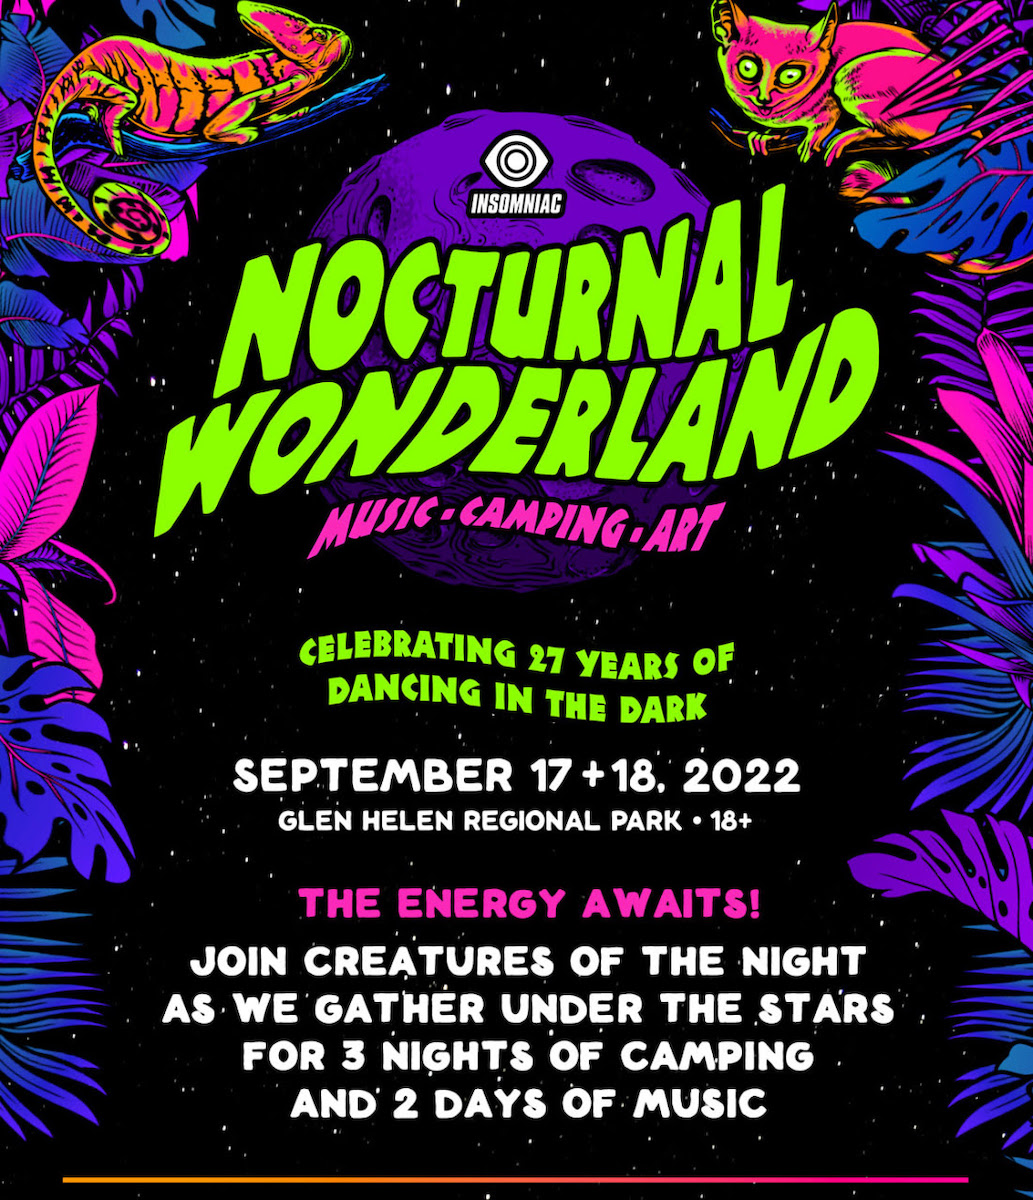 Nocturnal Wonderland Festival California 2022